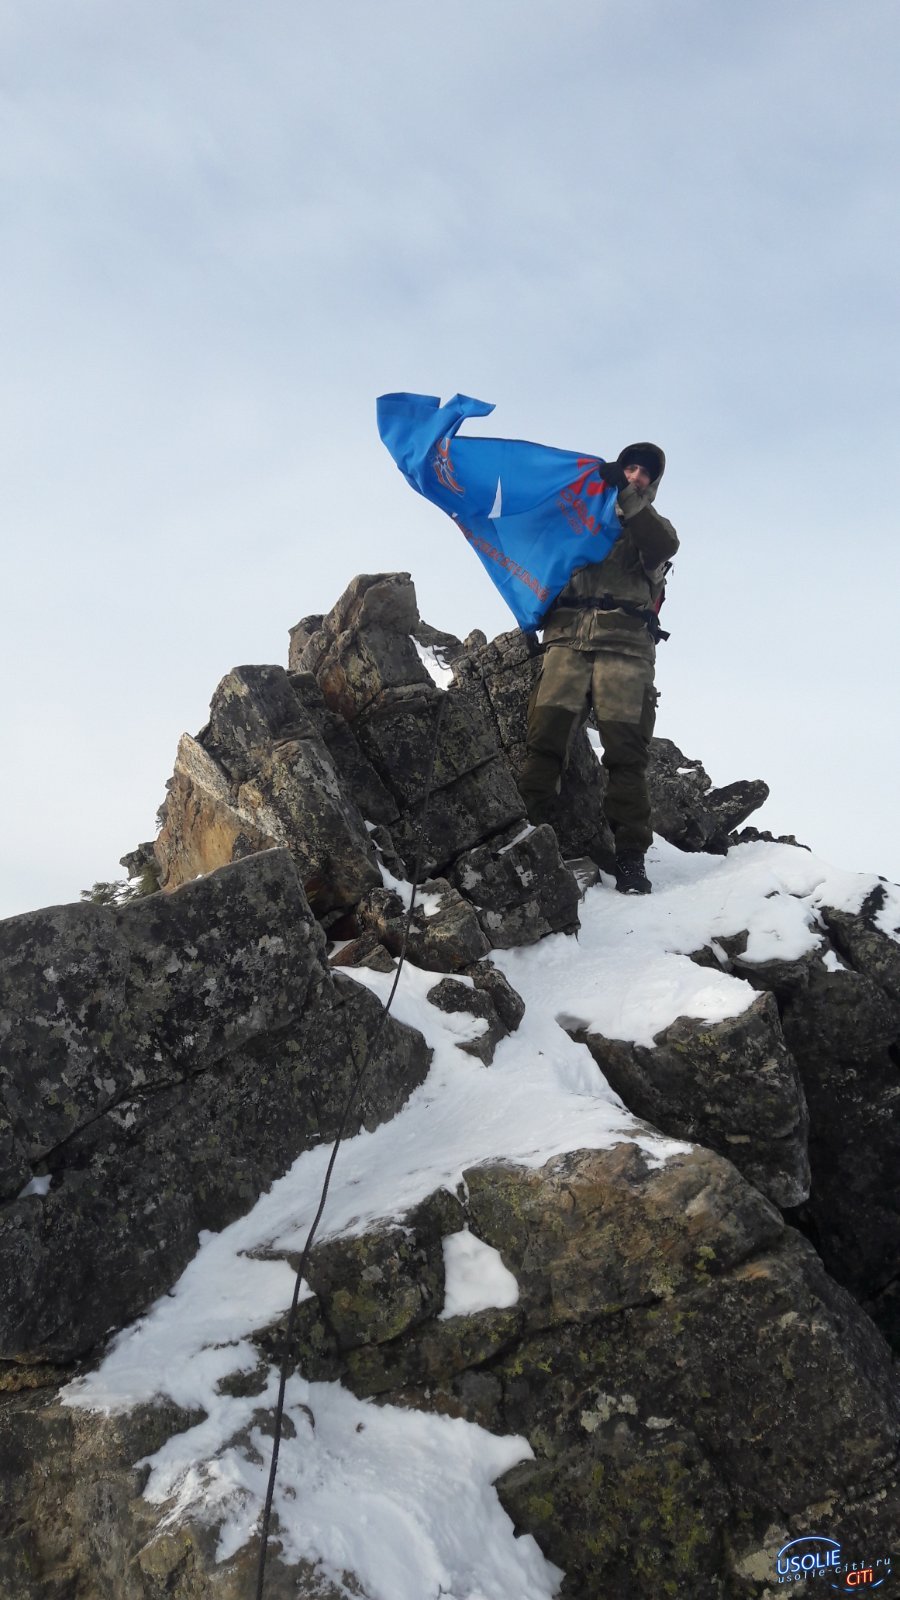 Спасатели из Усолья установили флаг на вершину горного хребта Хамар-Дабан